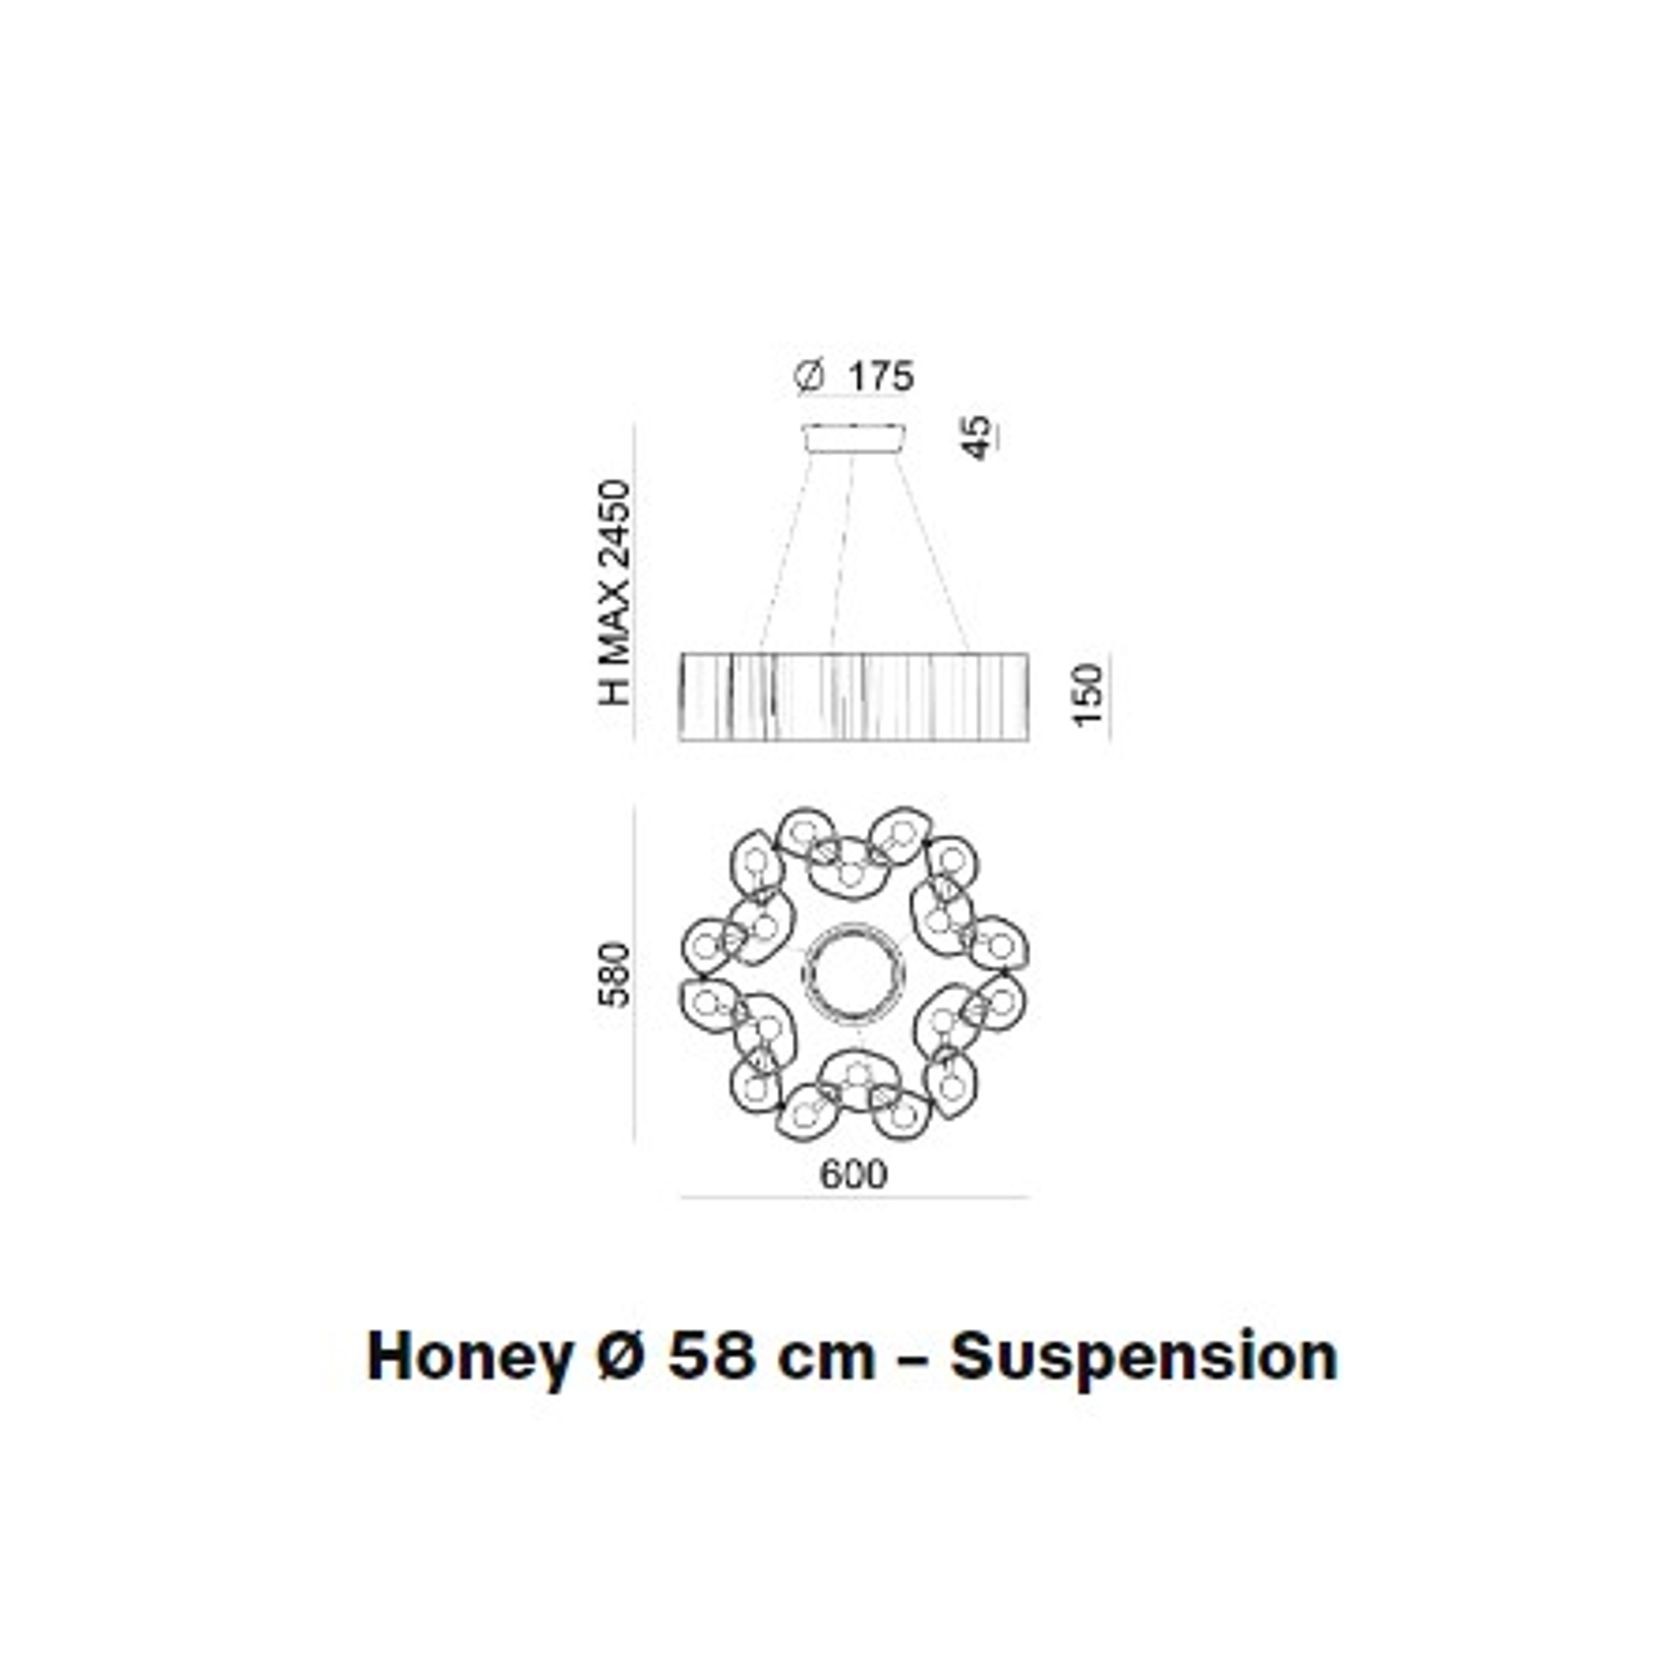 Honey - 2019 Suspension gallery detail image